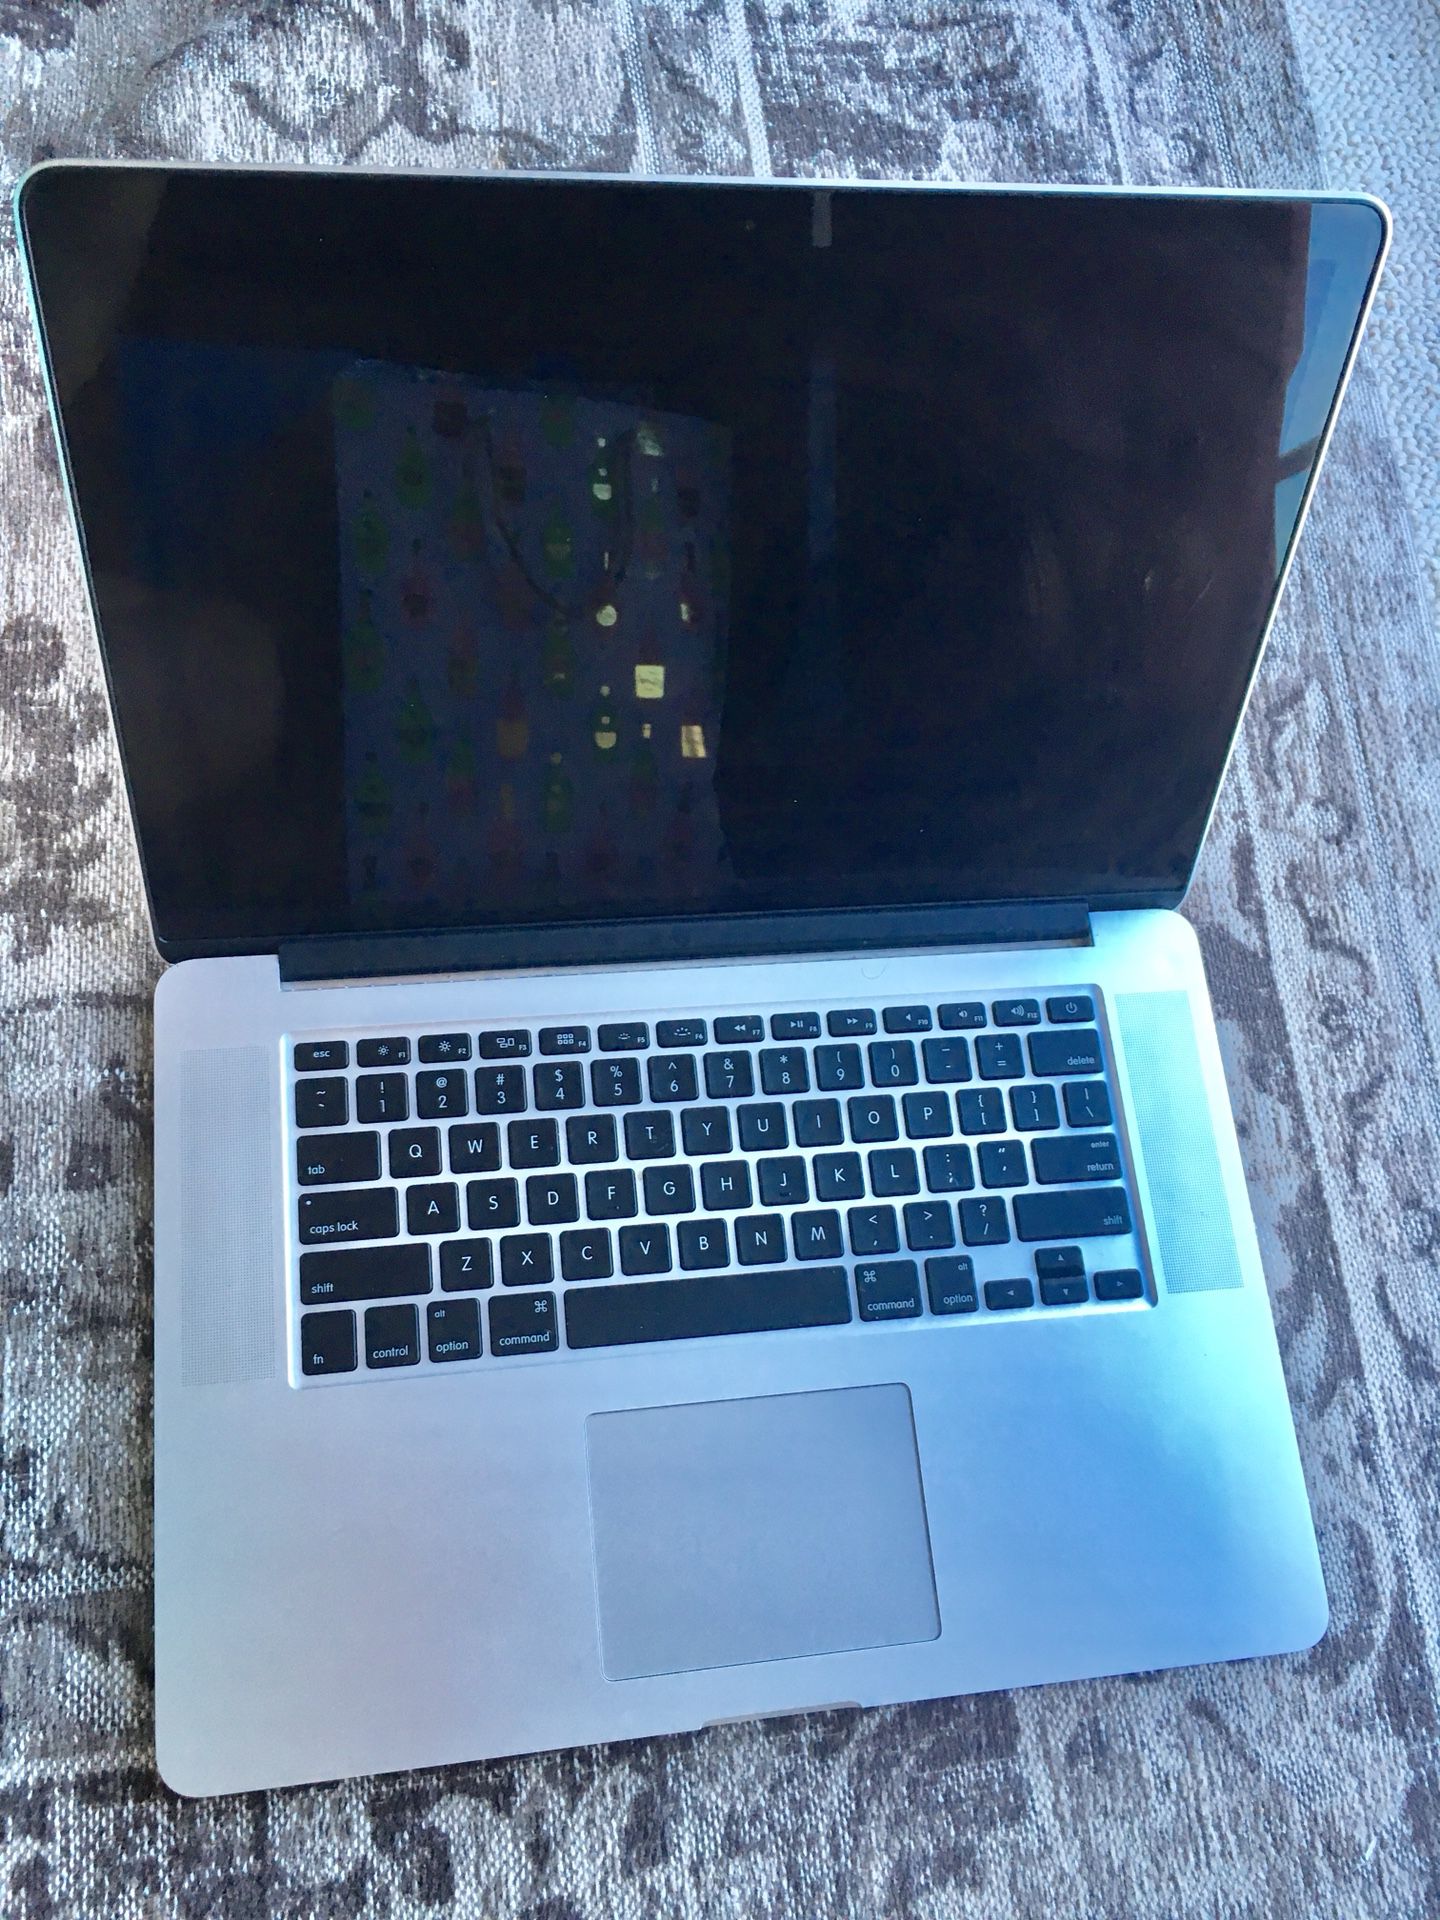 Apple MacBook Pro 15" laptop - Retina